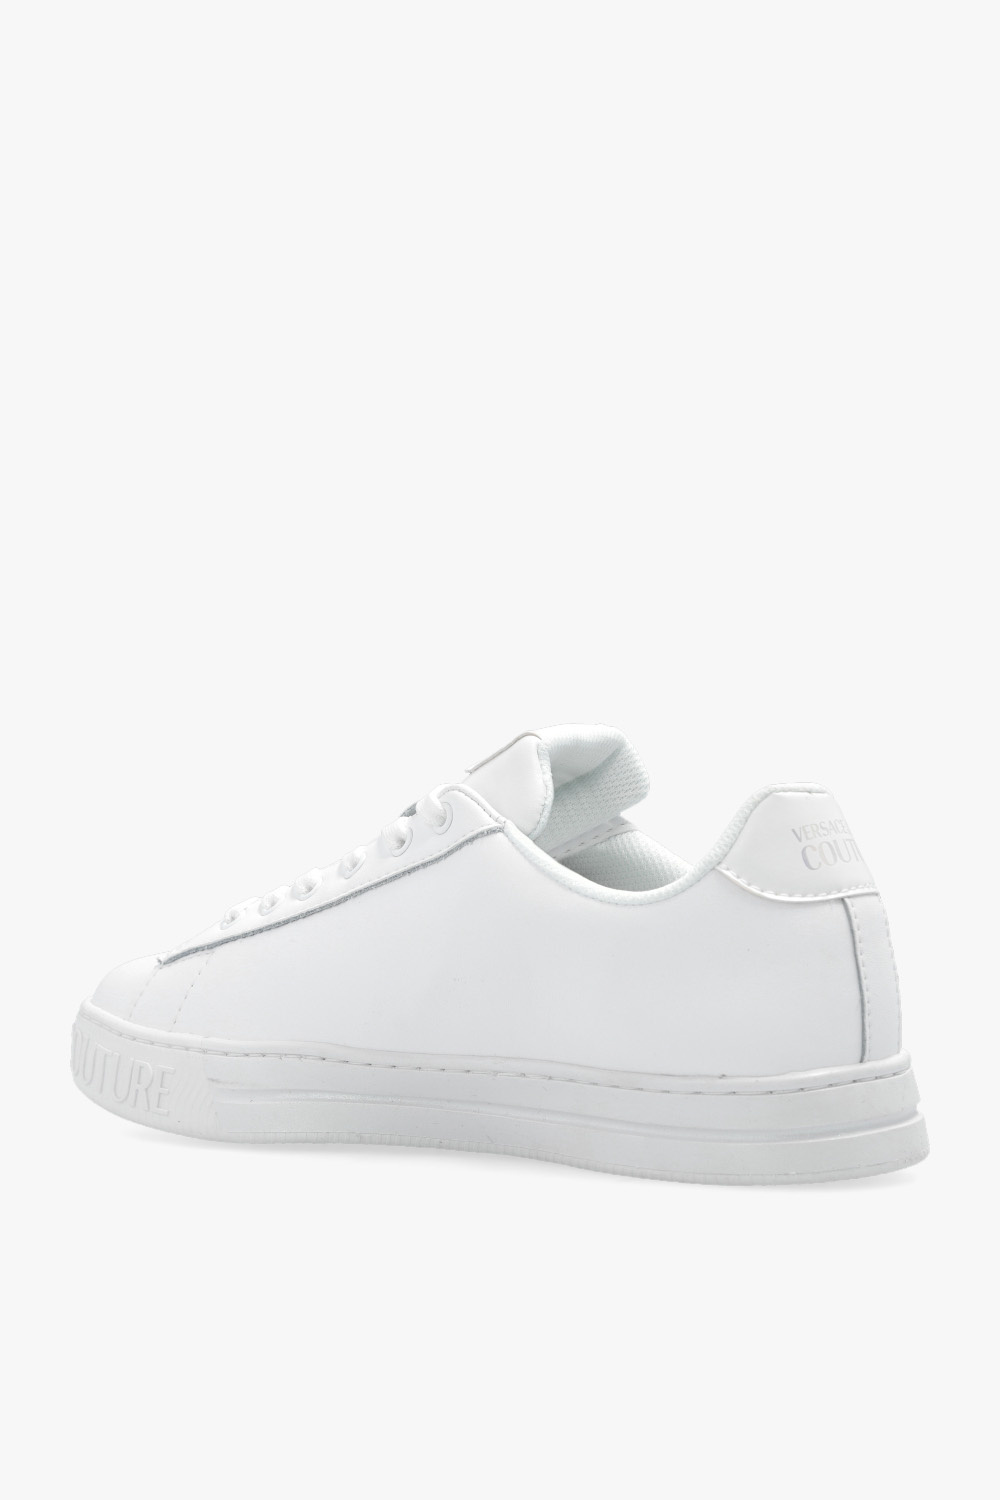 Superga white sneakers ‘Court 88’ sneakers